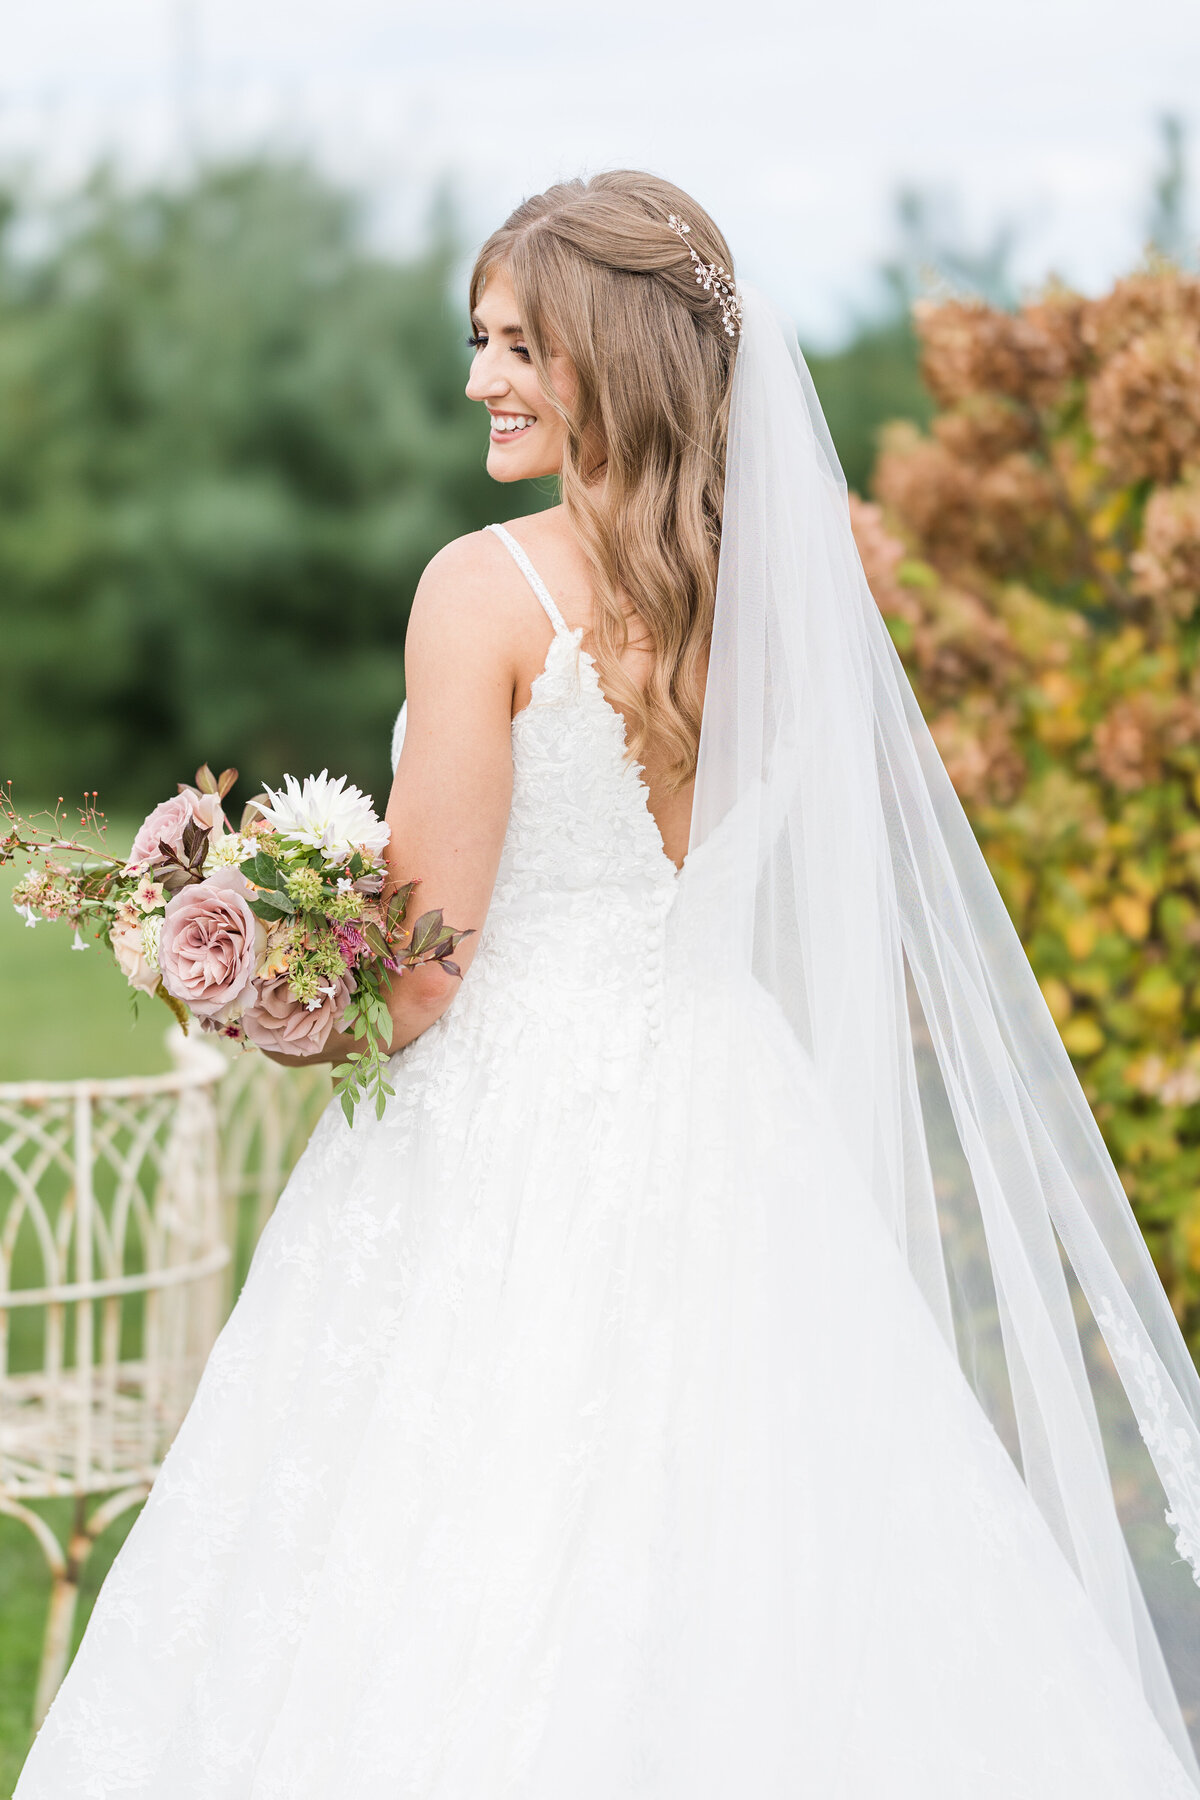 Kelsie & Marc Wedding - Taylor'd Southern Events - Maryland Wedding Photographer -27823